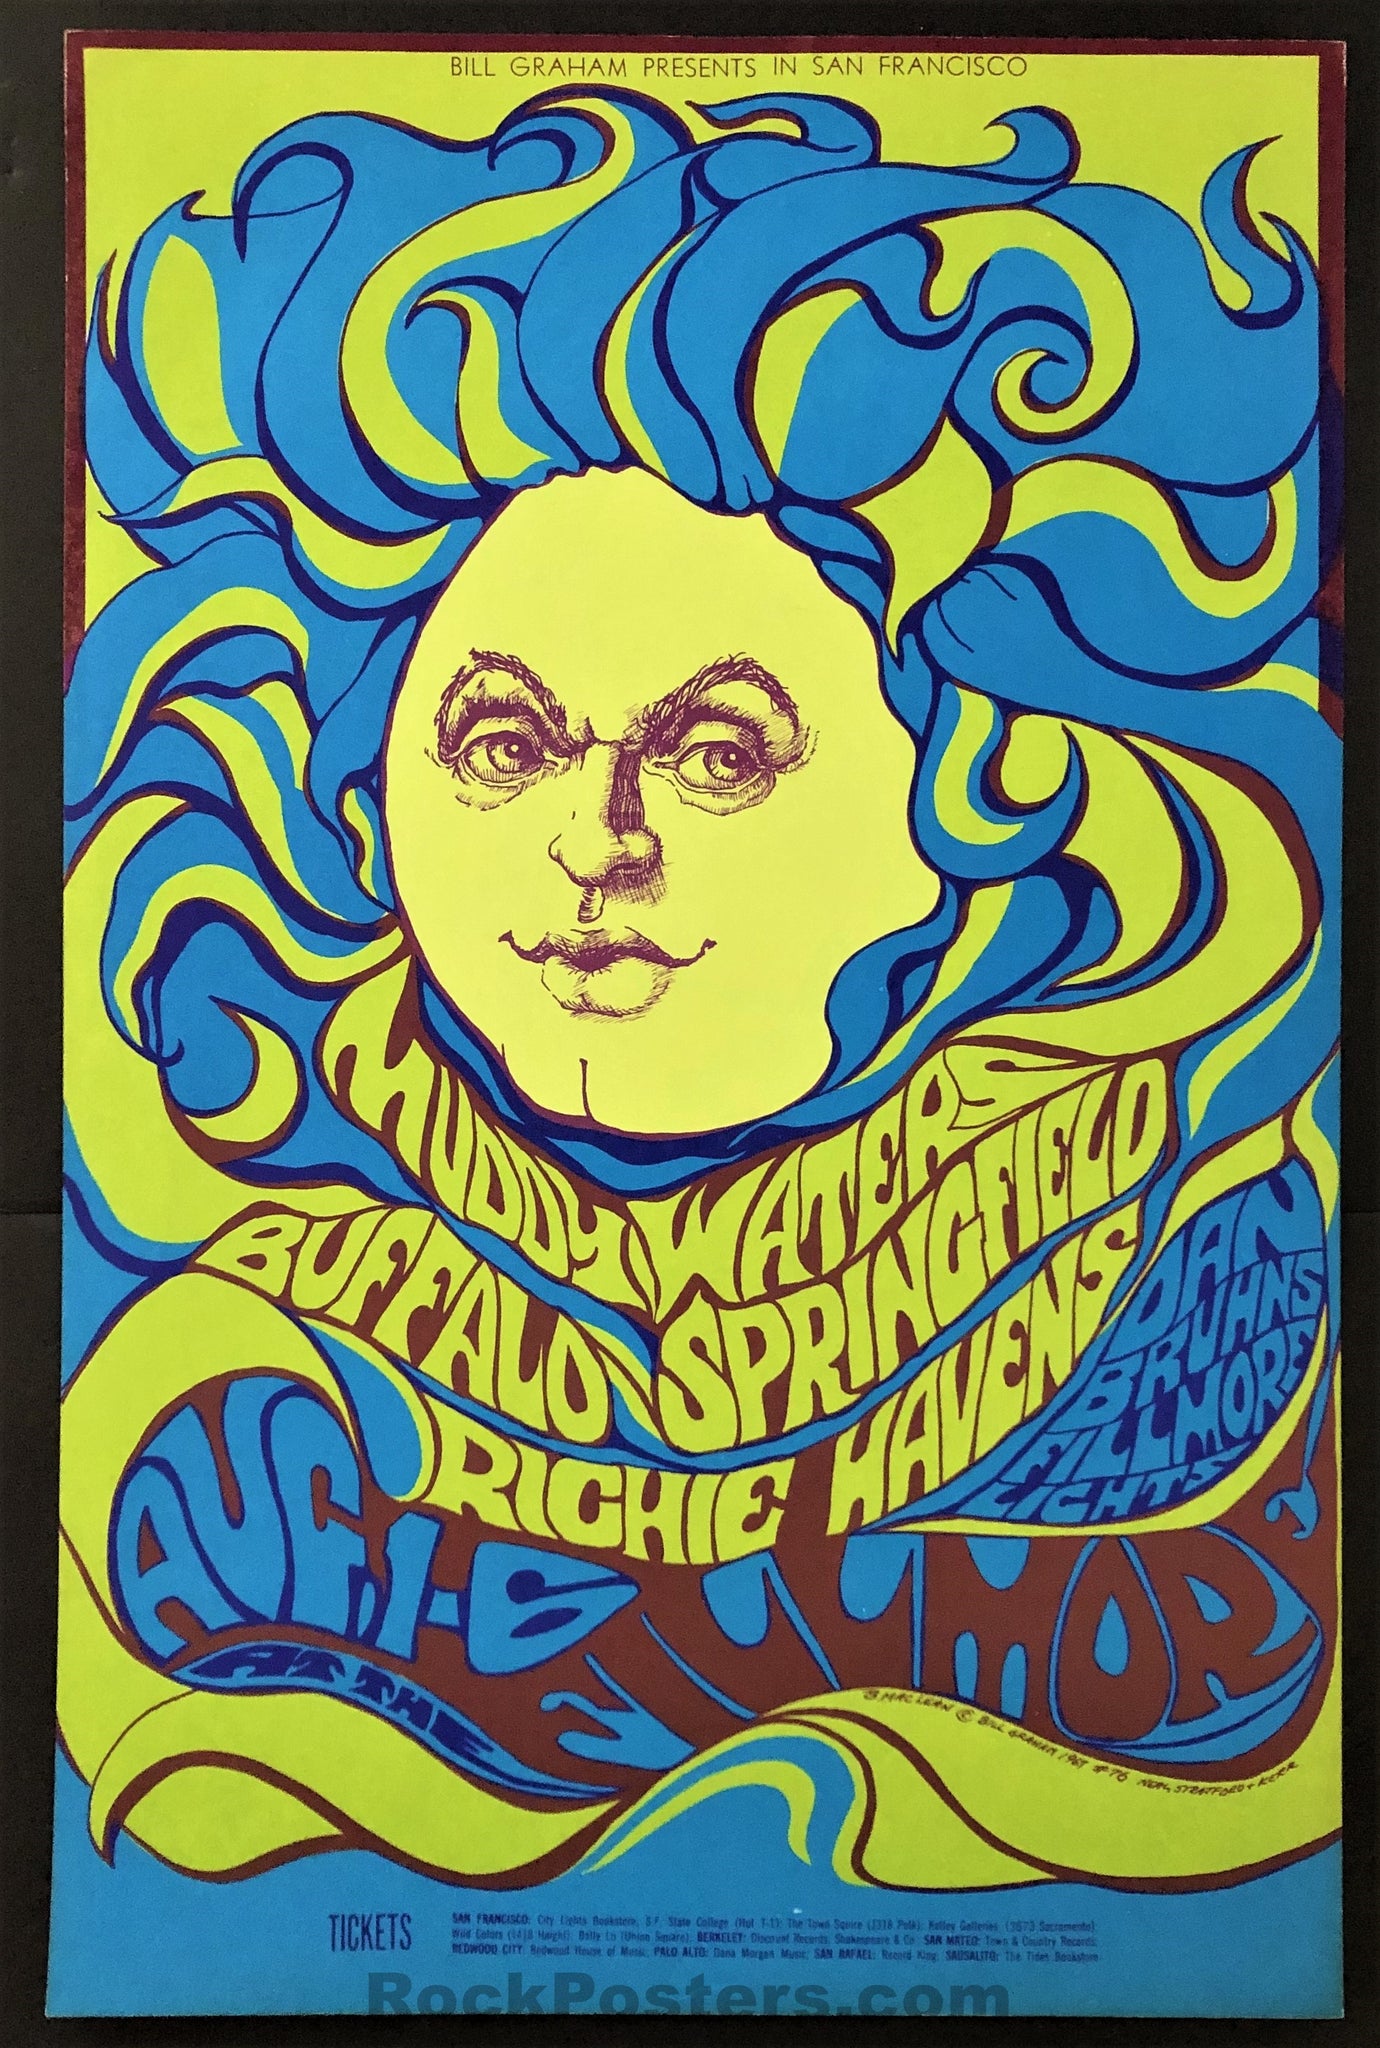 AUCTION - BG-76 - Buffalo Springfield - Bonnie MacLean - 1967 Poster - Fillmore - Excellent